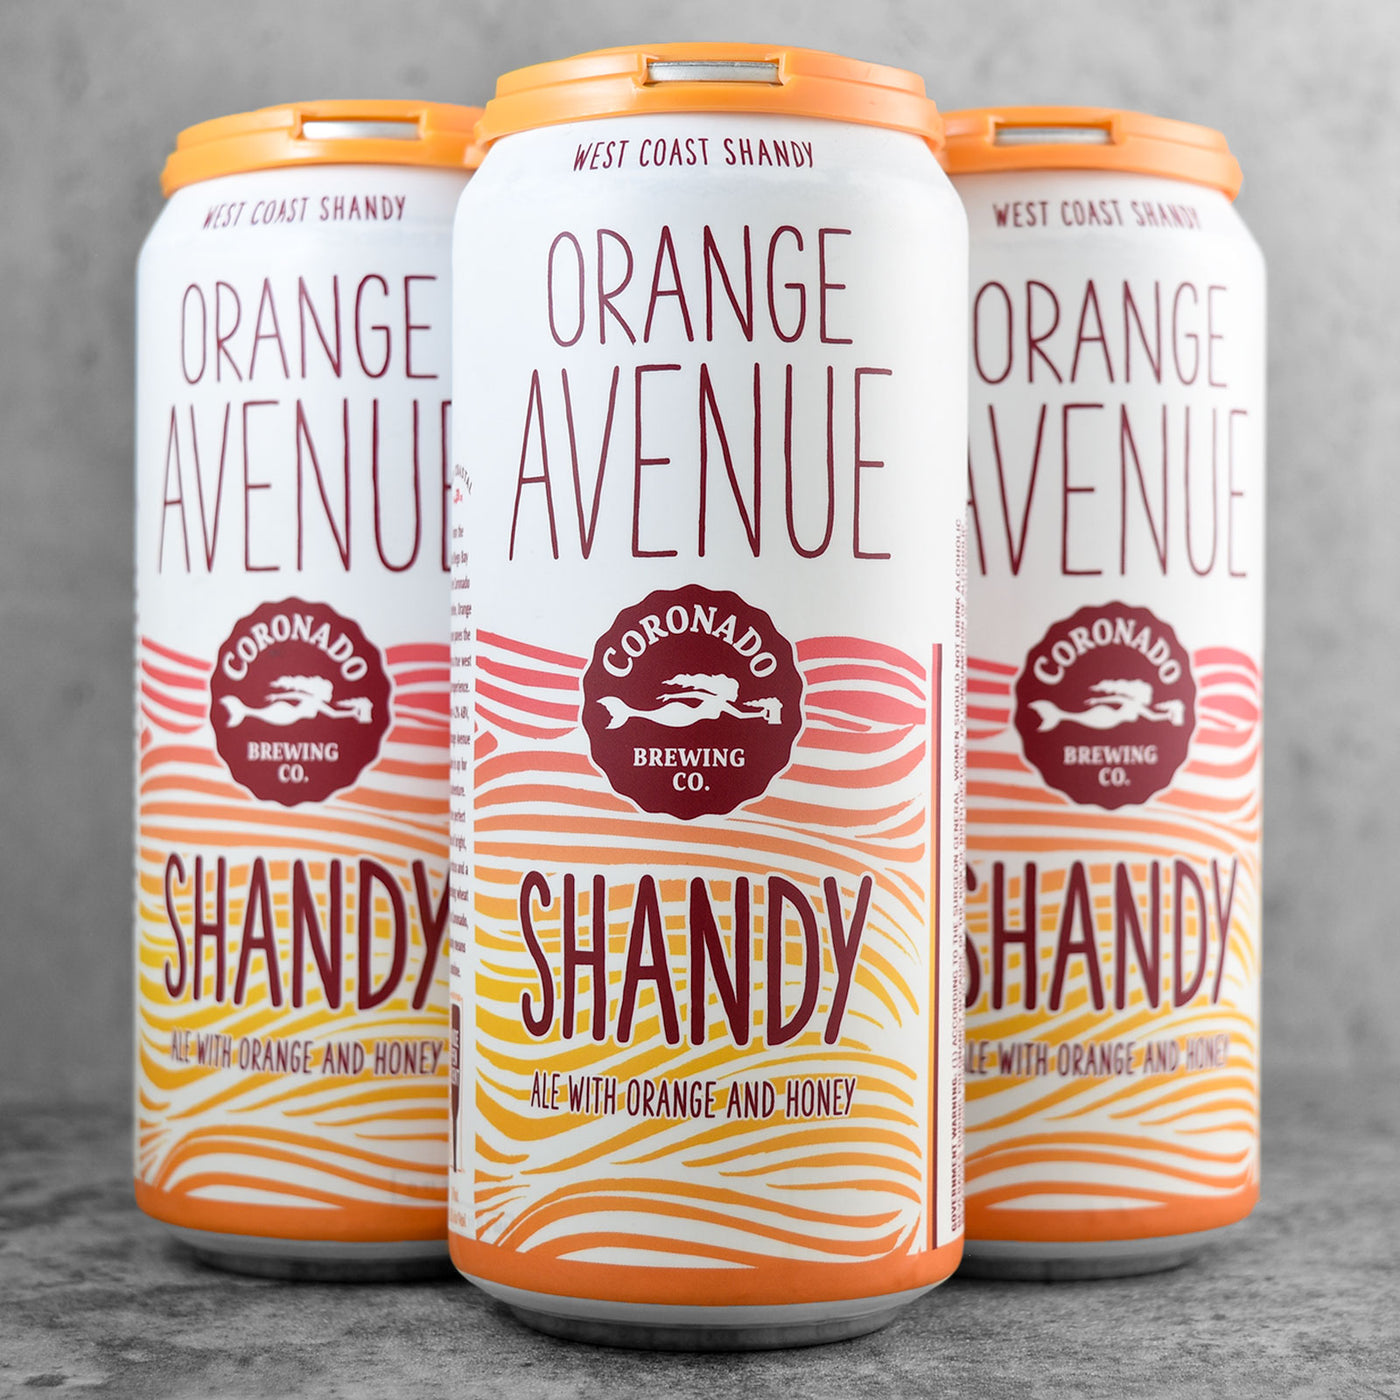 Coronado Orange Avenue Shandy